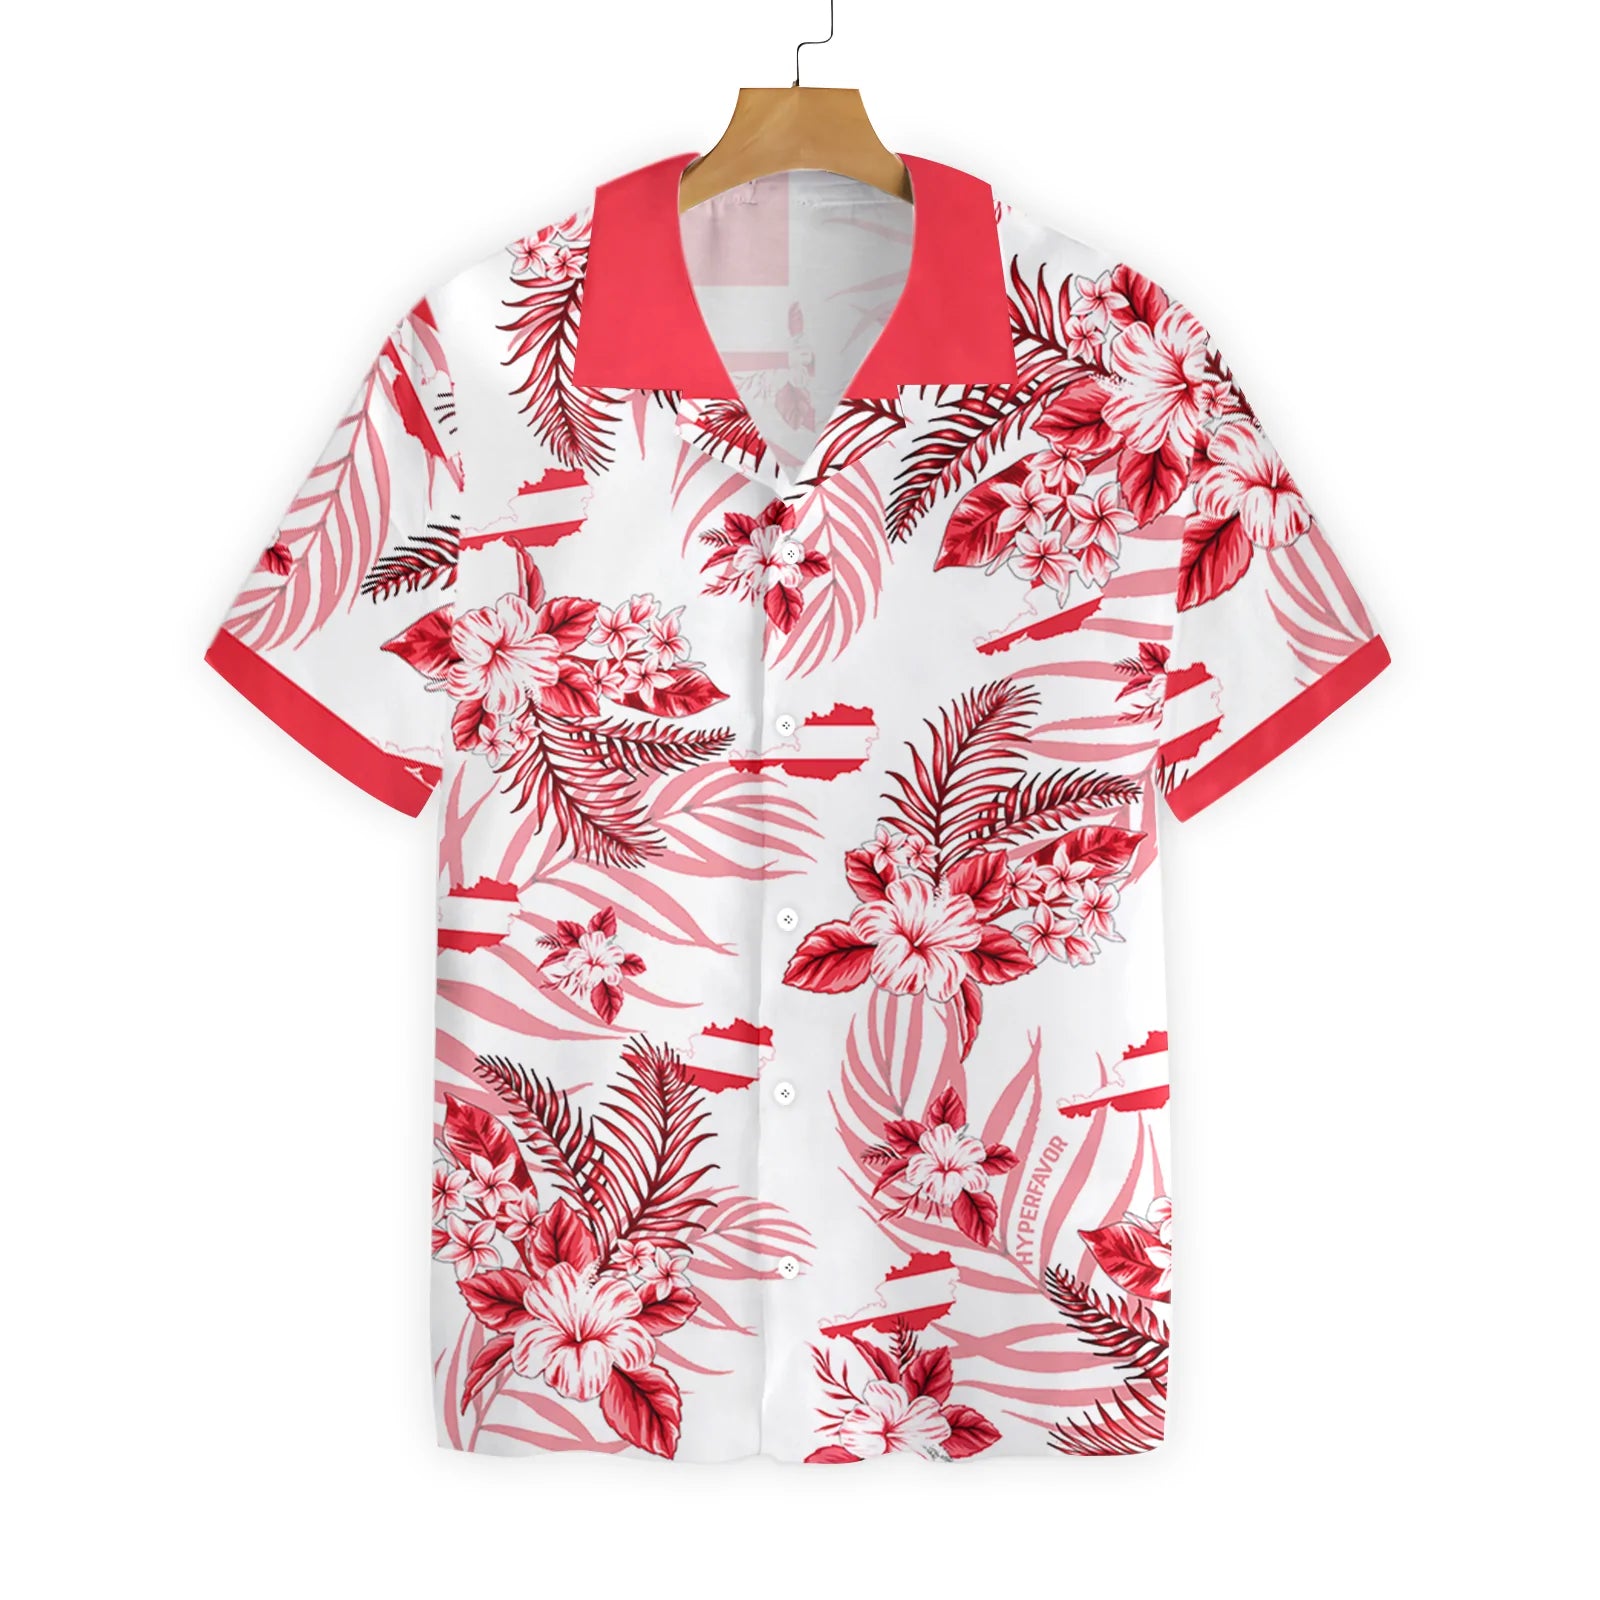 Aloha Republic Hibiscus Party Red Hawaiian Shirt 3XL